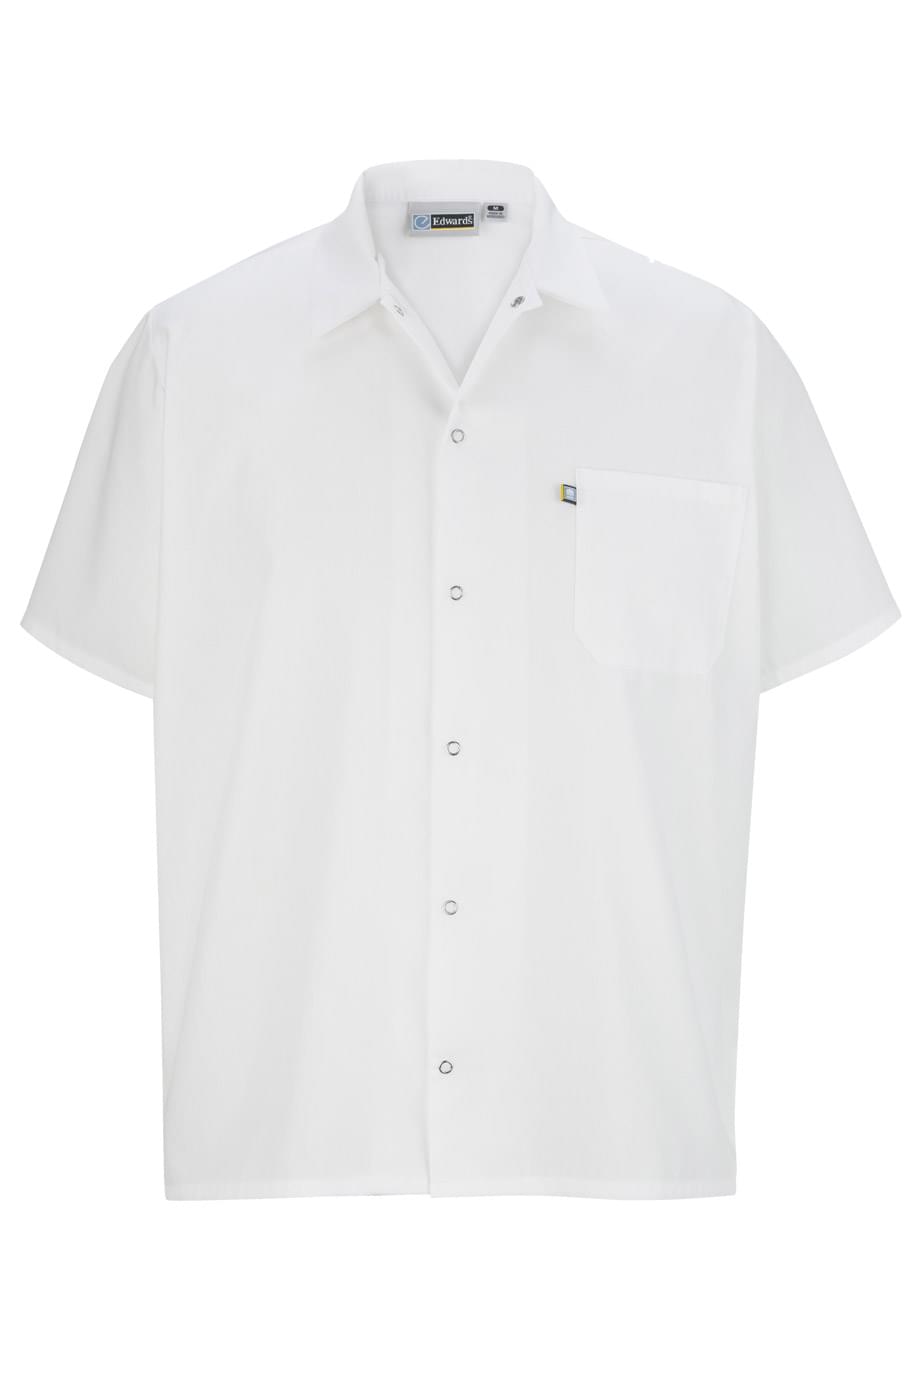 Edwards Garment 1302 - Snap Front Utility Shirt